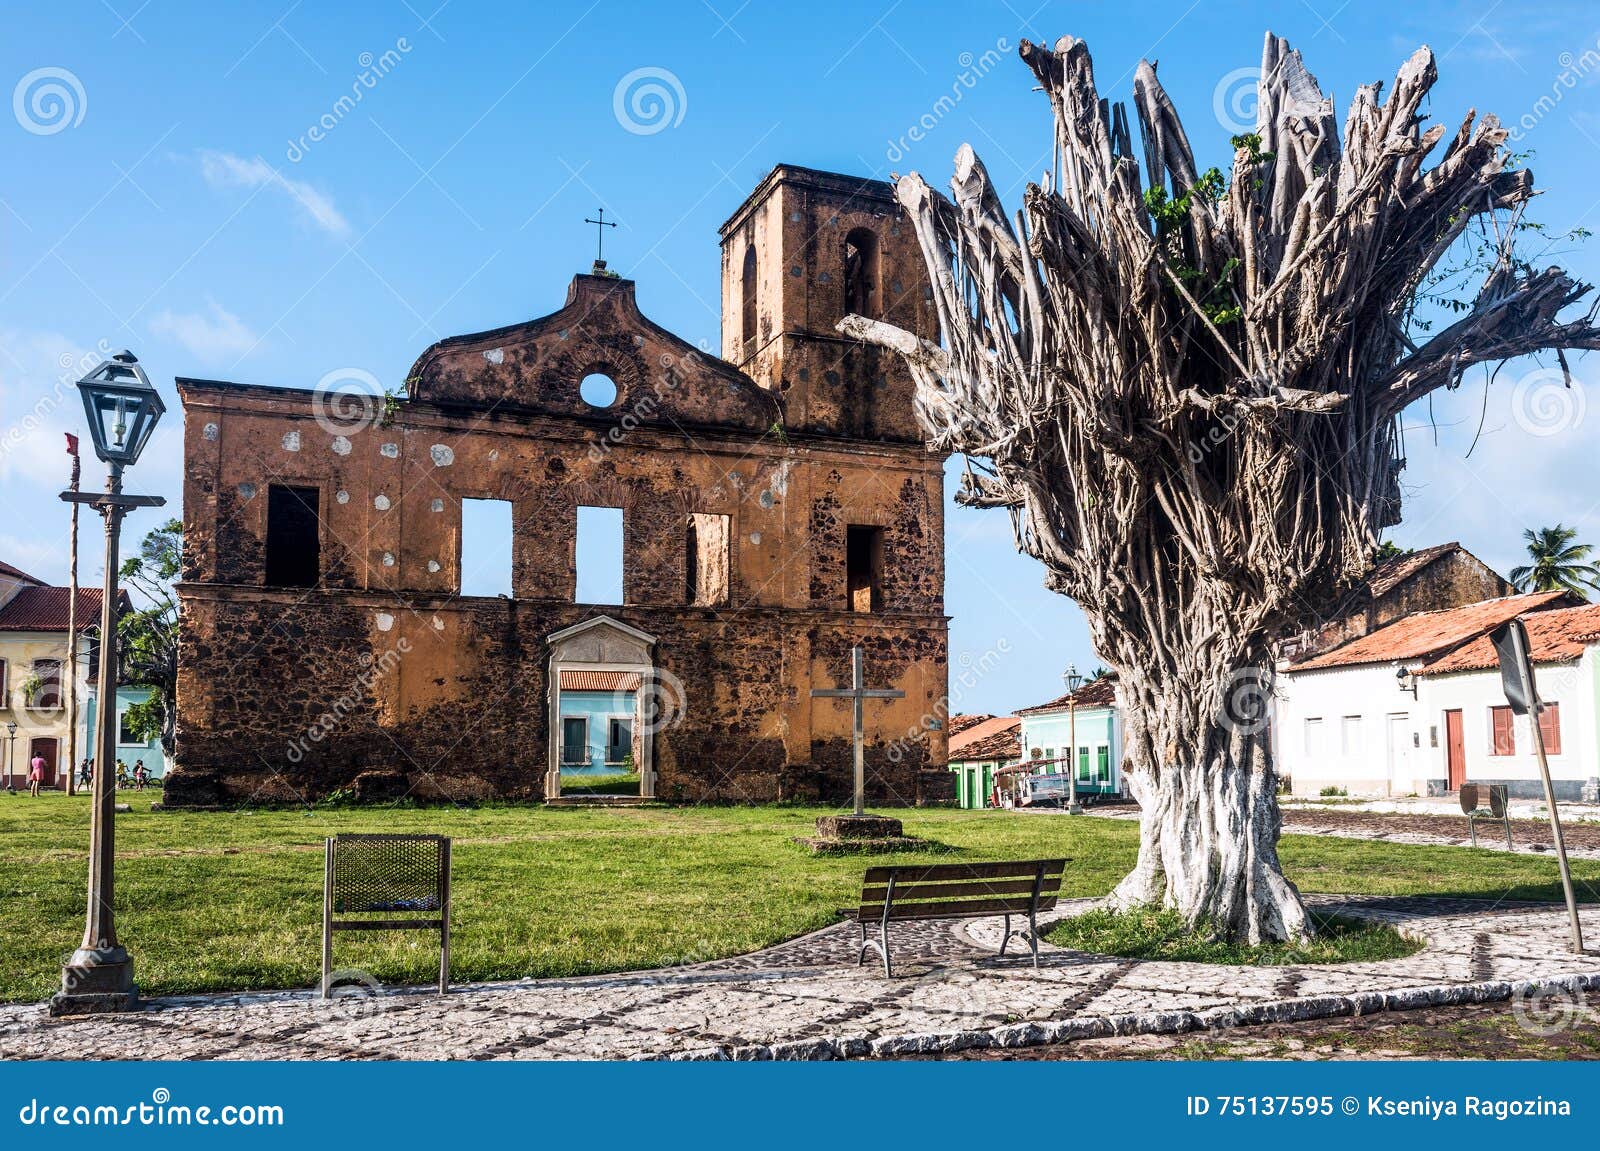 matriz church ruins in the historic alcantara, maranhao, brazil